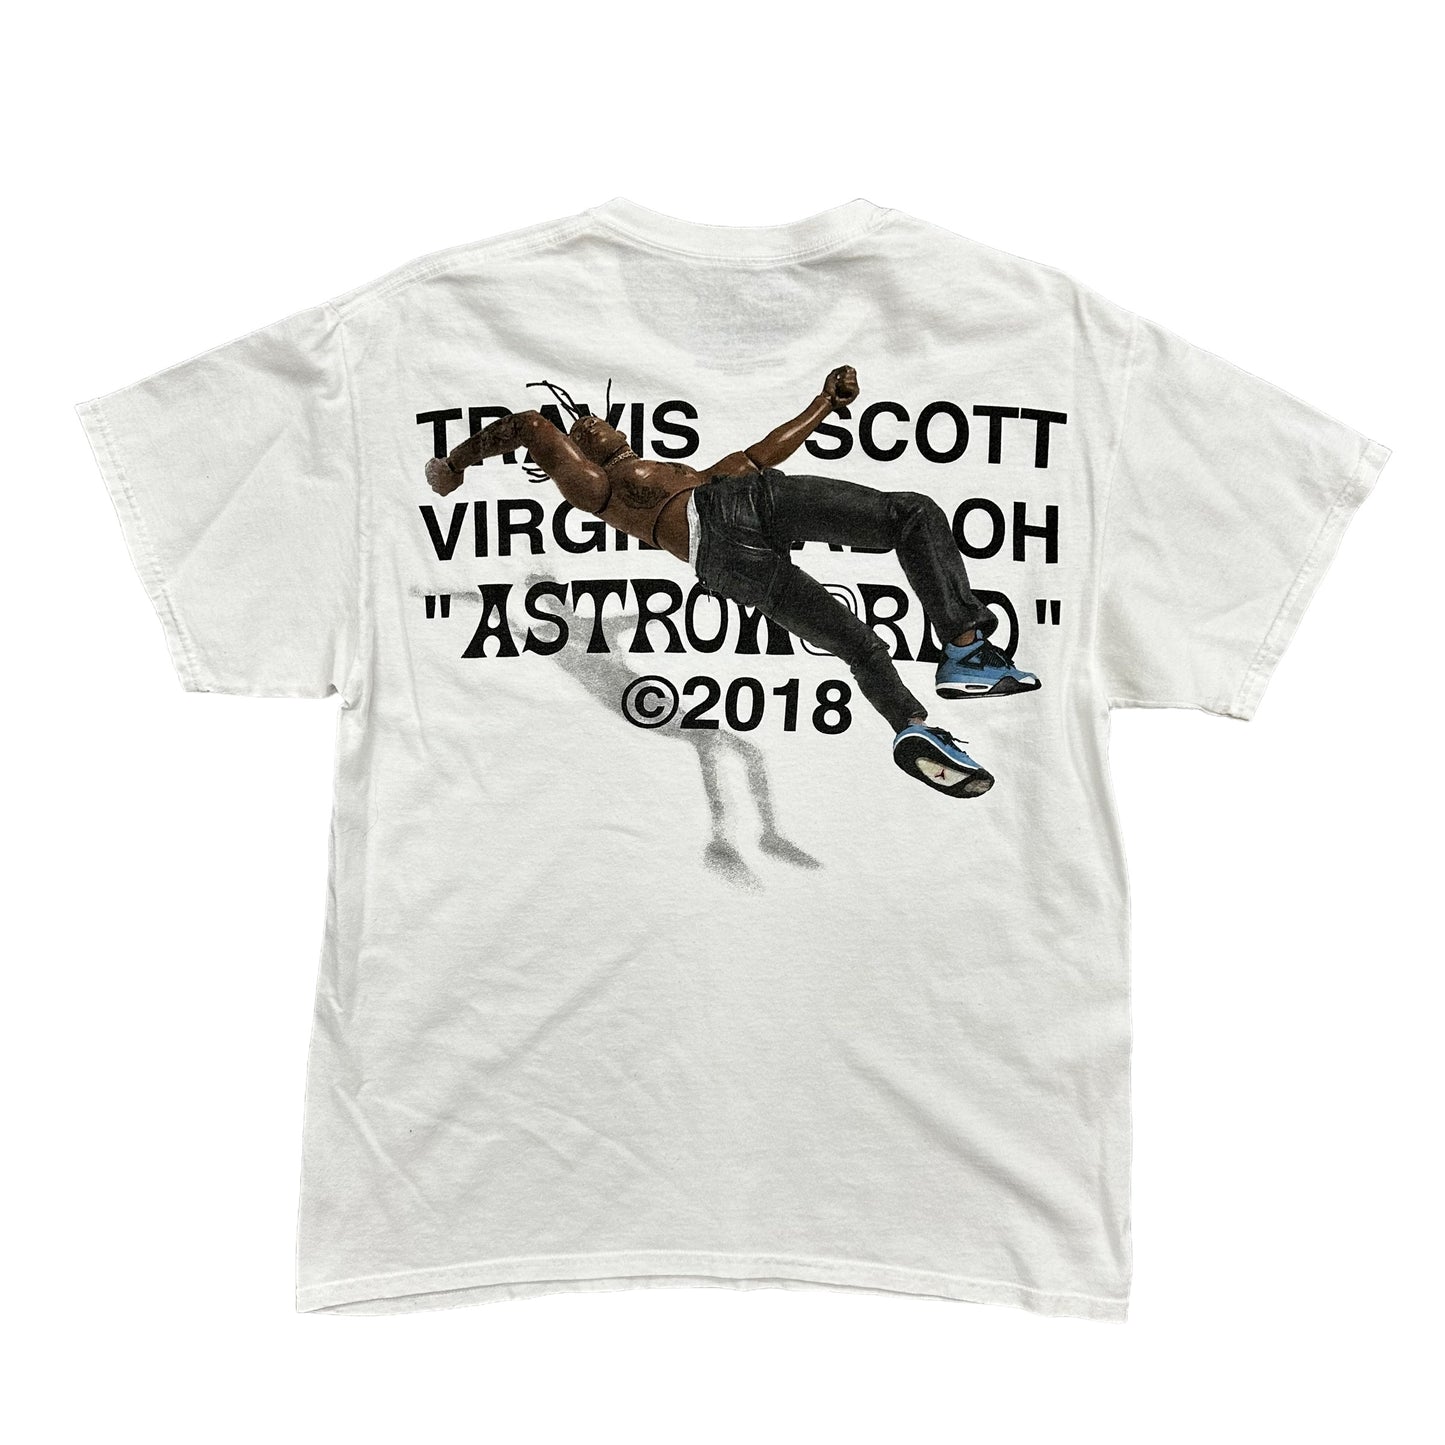 Travis Scott x Virgil Abloh Astroworld White Tee